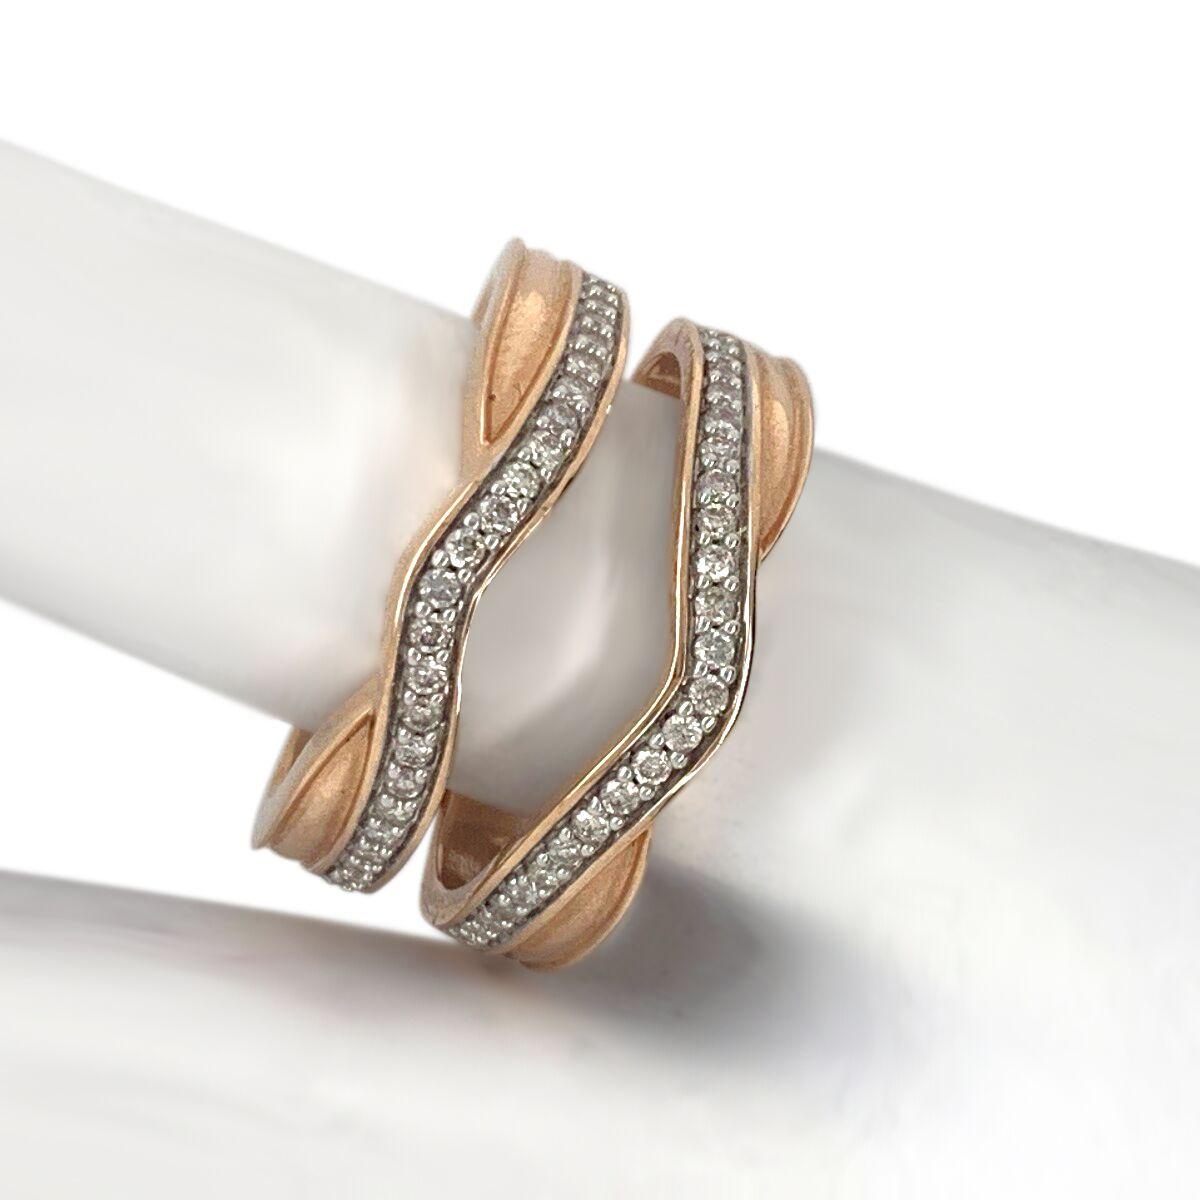 Material: 14k Rose Gold
Hallmark: 14K NDI
Metal Finish: High Polish
Ring Size: 6.75
Gemstone: Diamond
Diamond Weight: 0.25 CT
Clarity: I